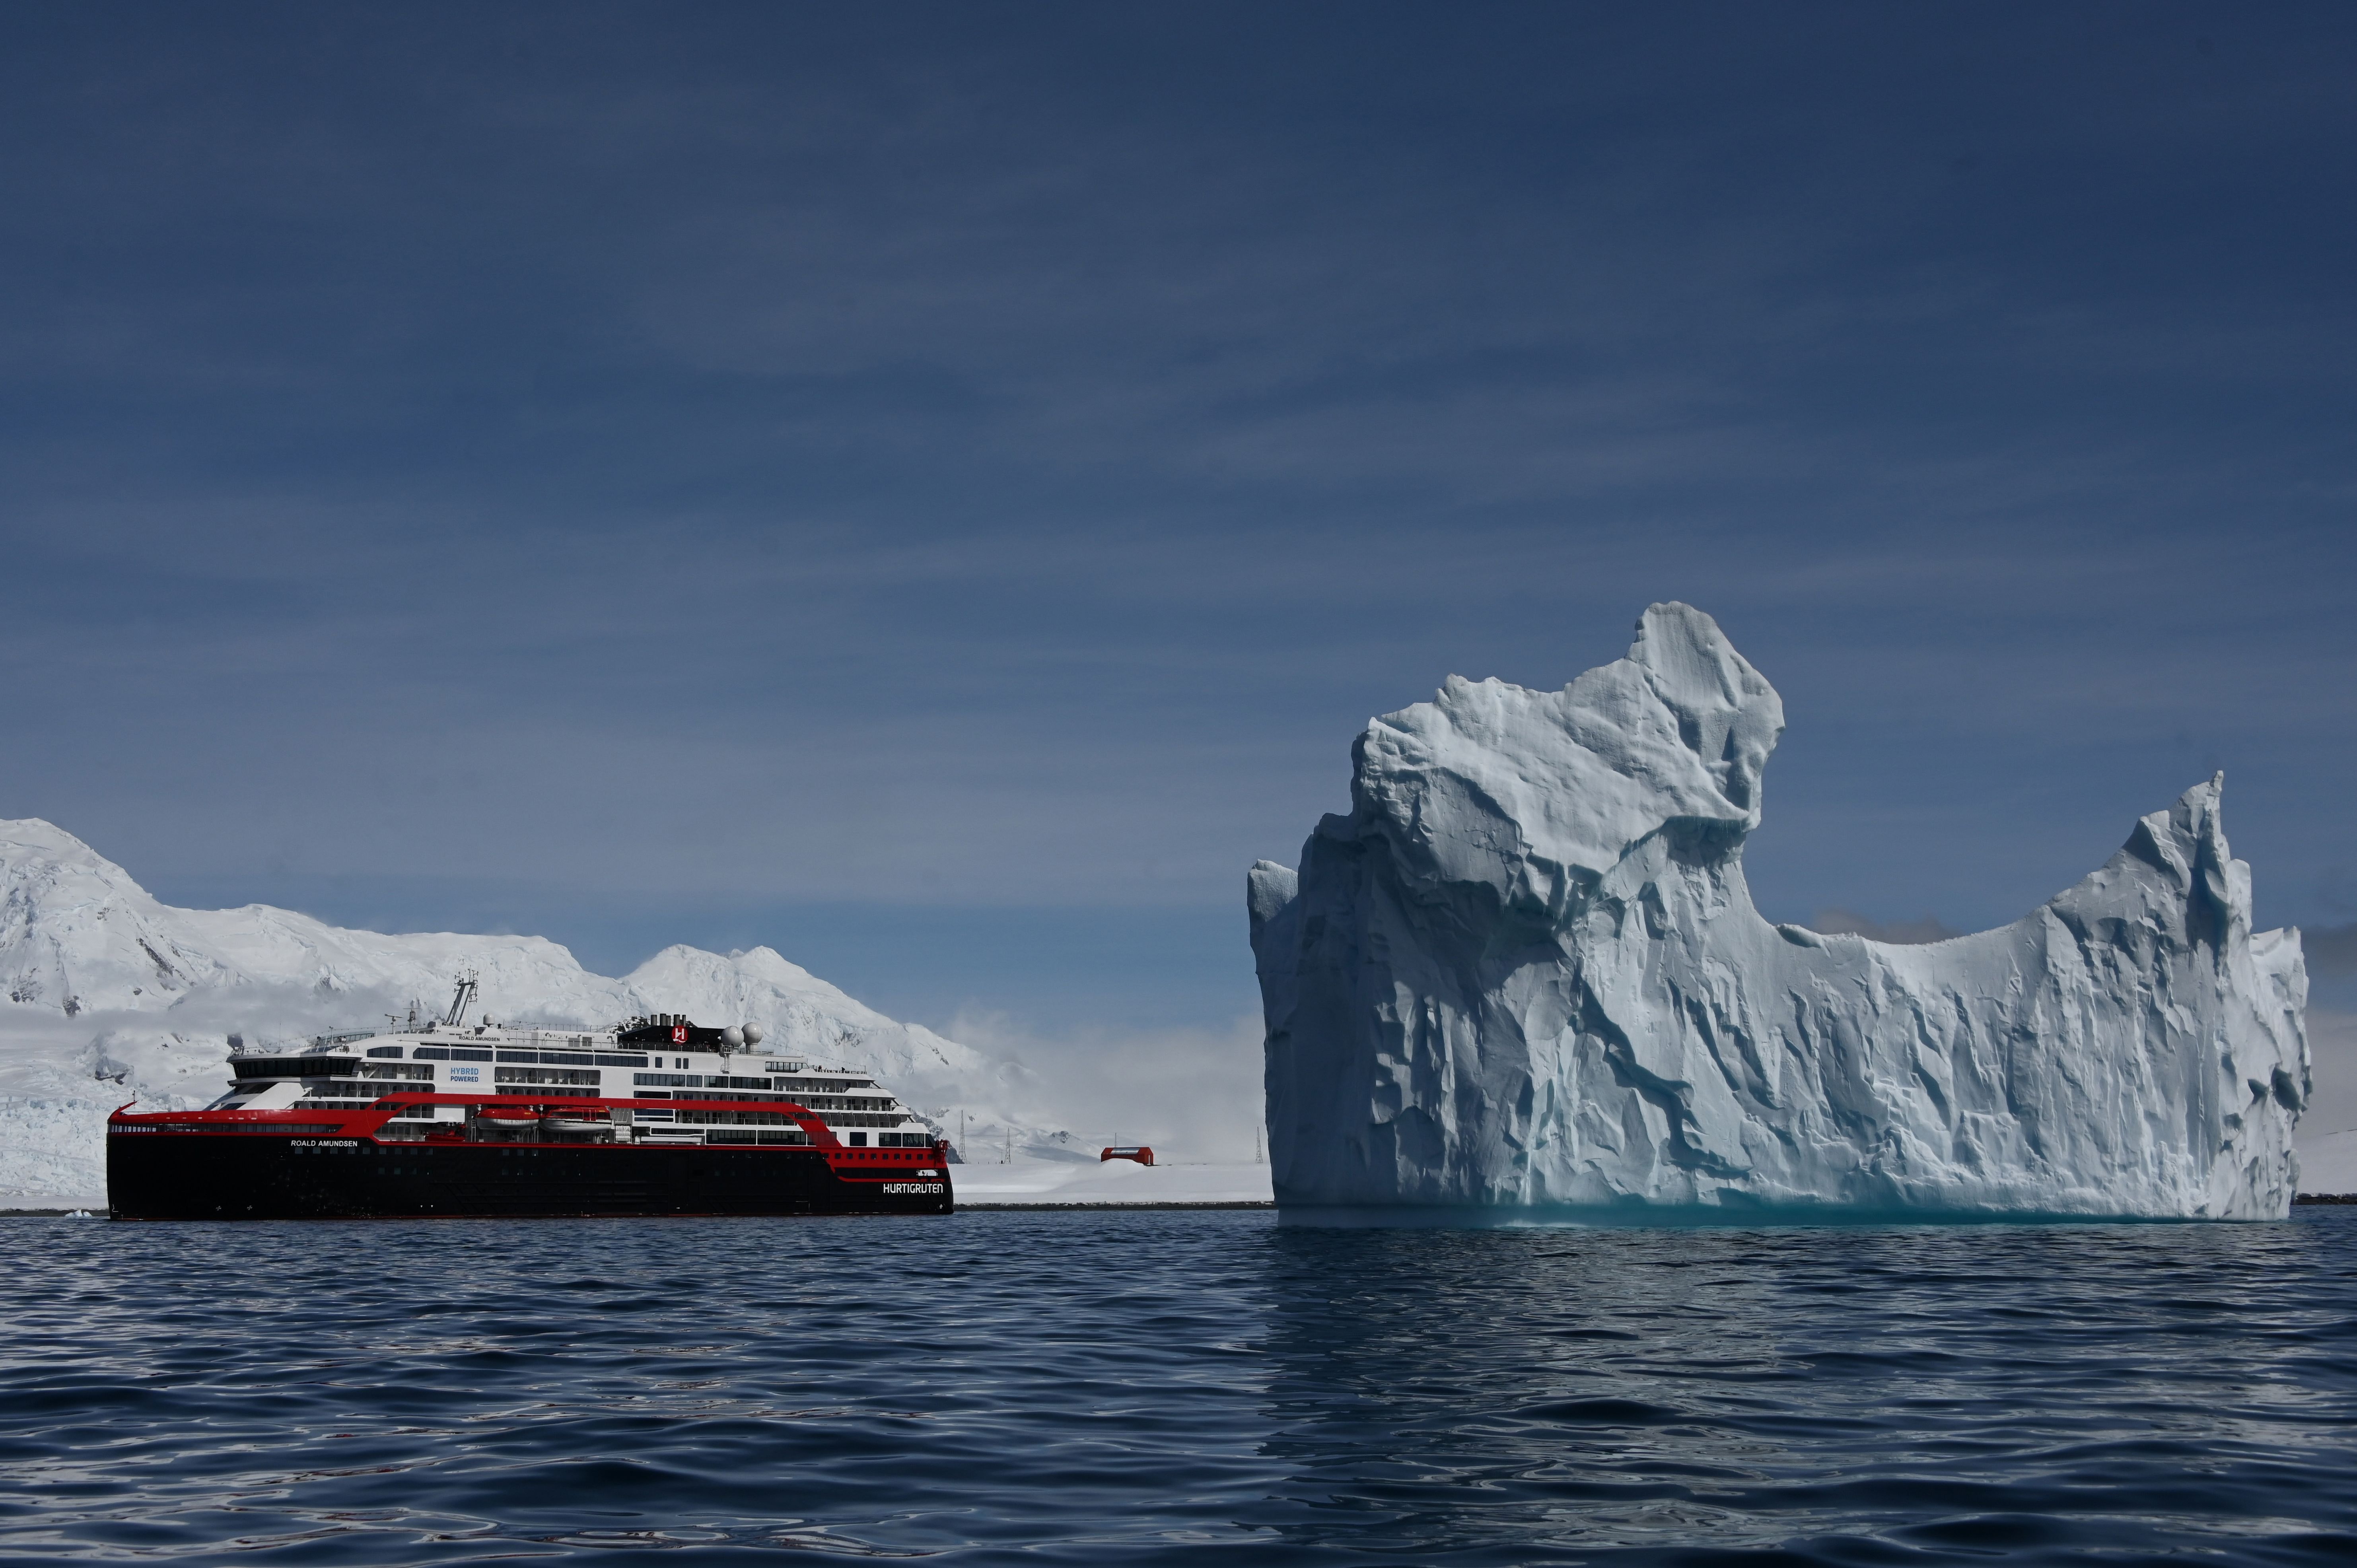 ms-roald-amundsen-hybrid-cruise-ship-antarctica-GettyImages-1185355327.jpg